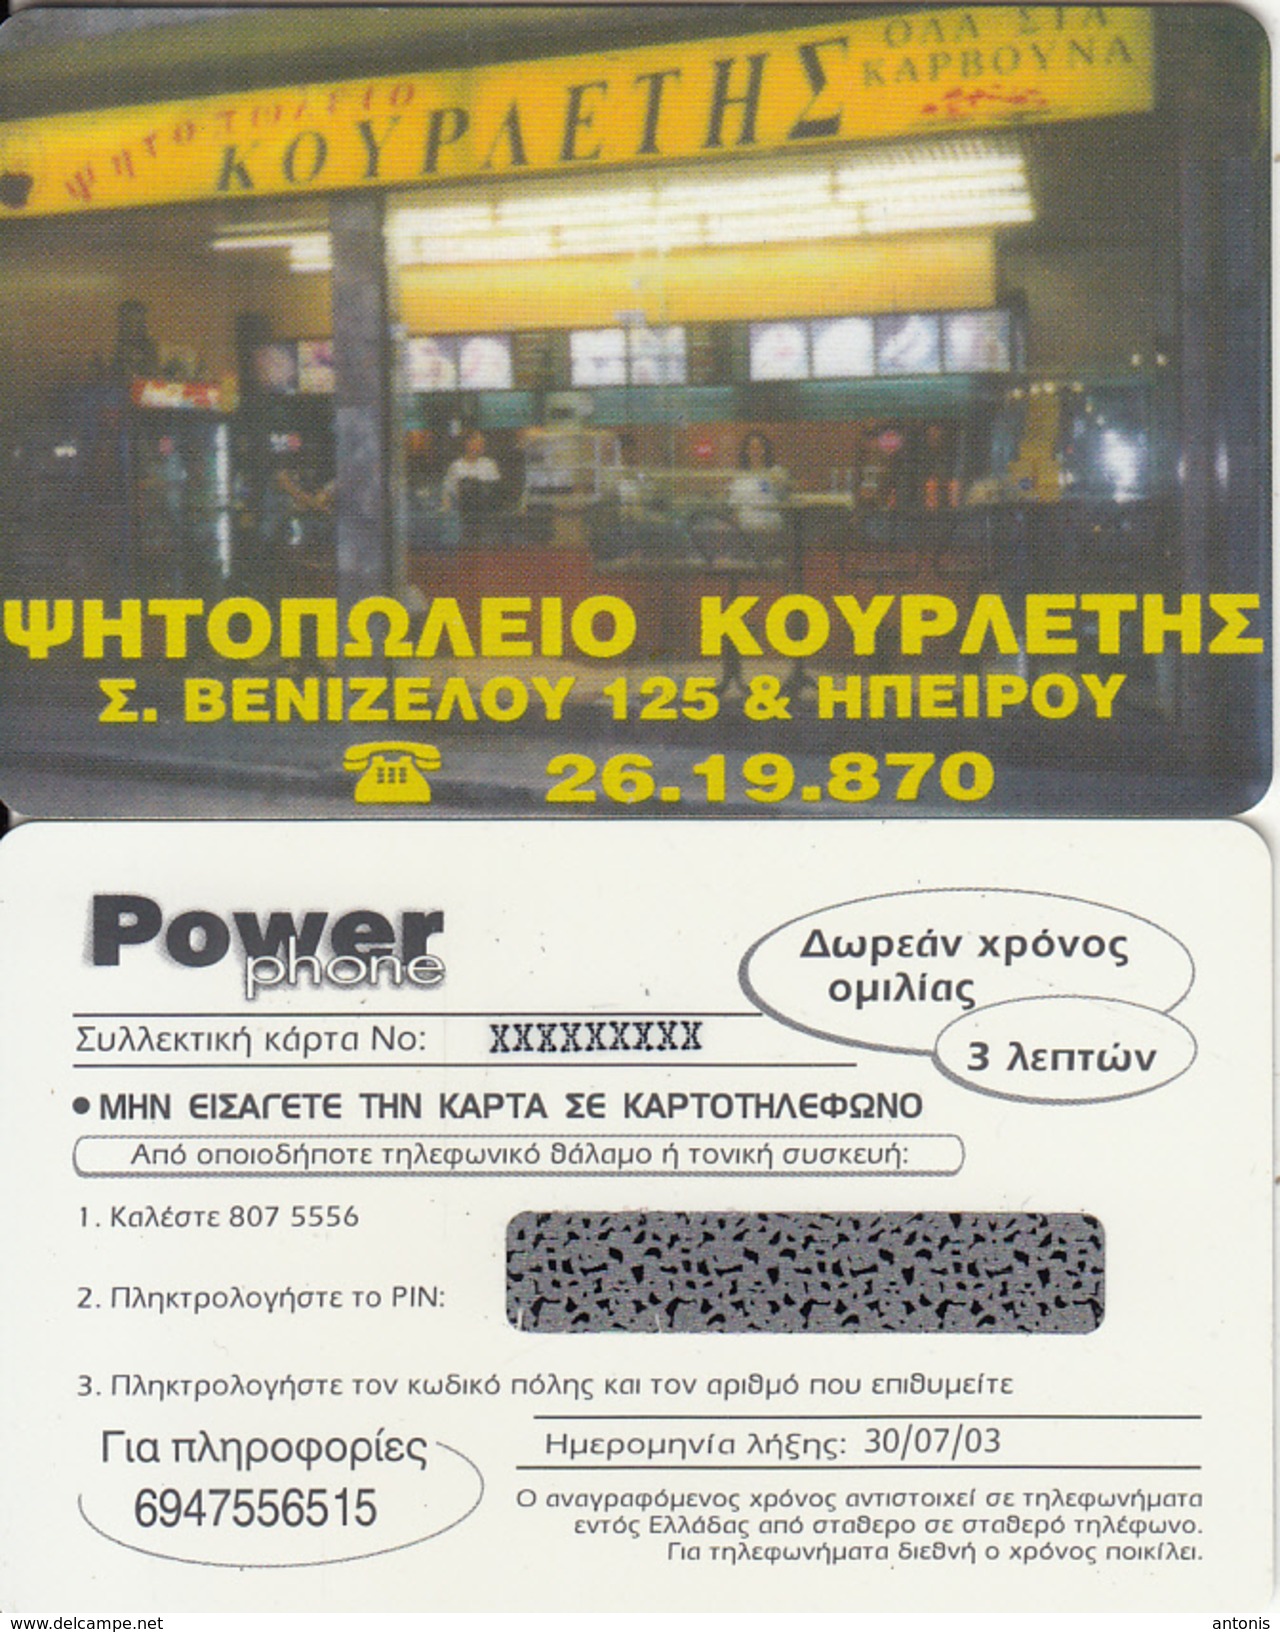 GREECE - Kourletis Restaurant 2, Power Phone Promotion Prepaid Card, Tirage 1000, Exp.date 30/07/03, Sample - Greece